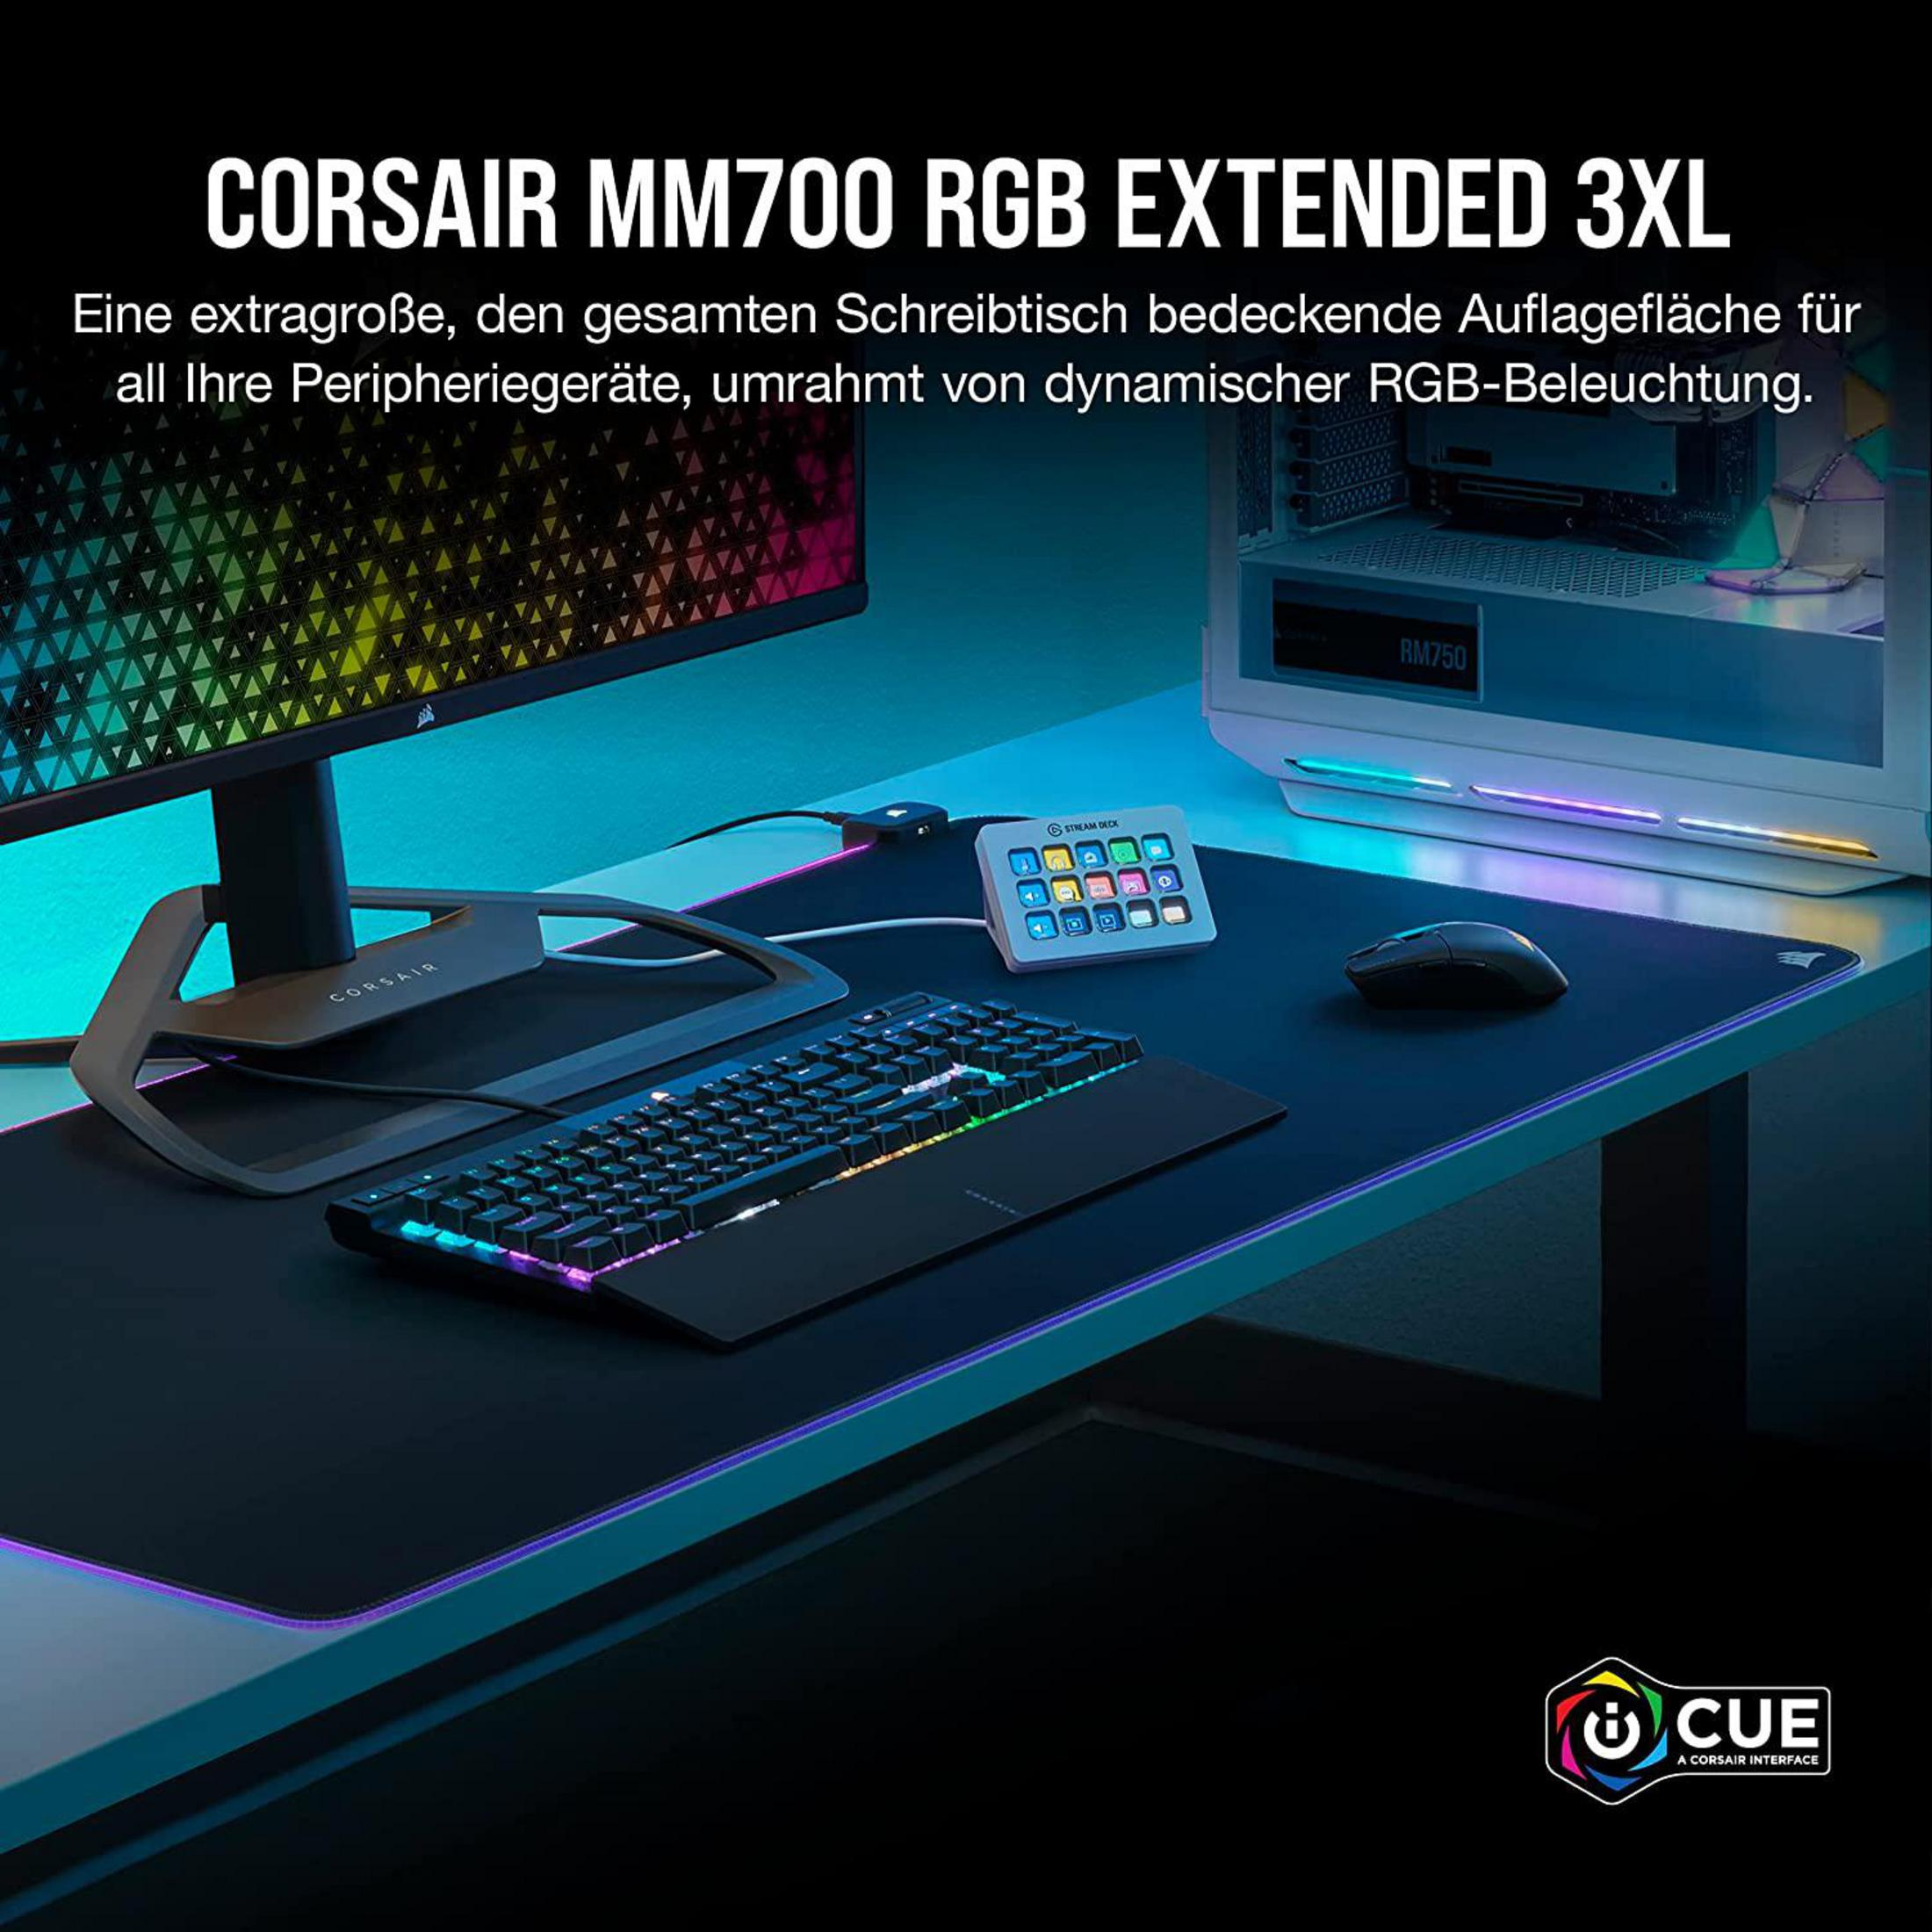 CORSAIR CH-9417080-WW MM700 RGB EXTENDED (150 150 mm Mauspad x 3XL Gaming mm)